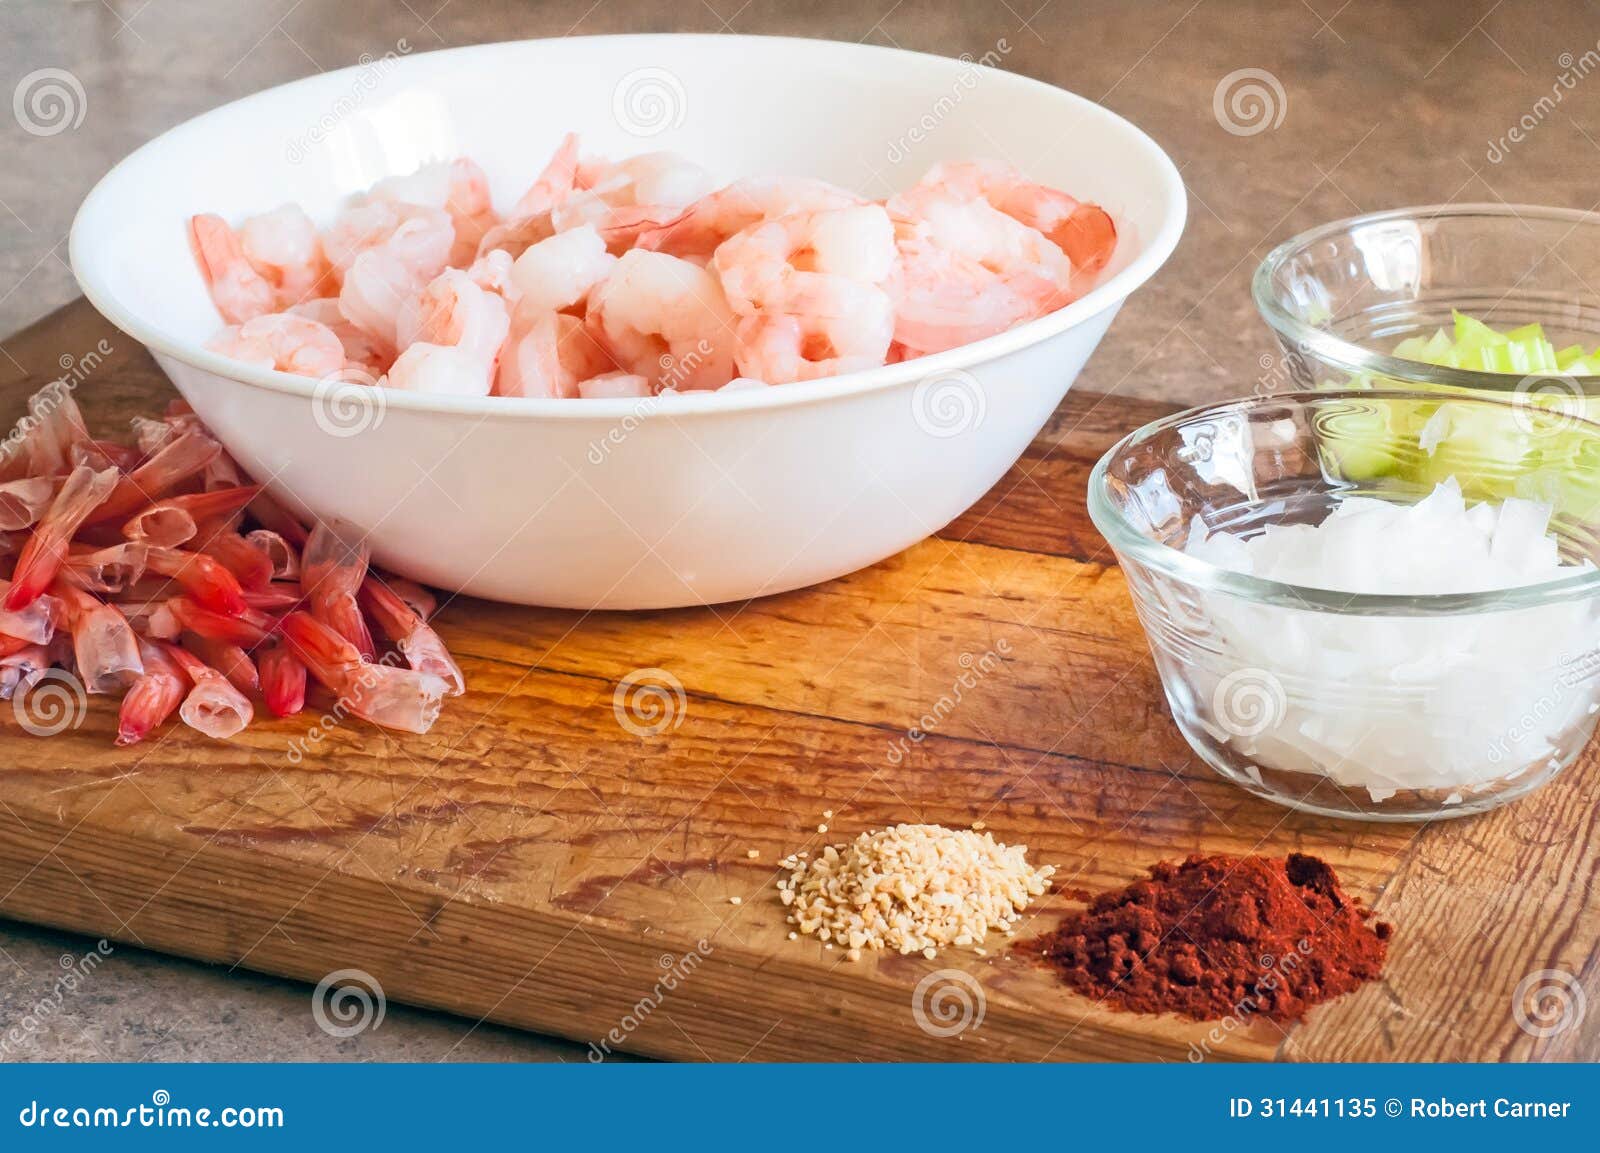 making shrimp creole